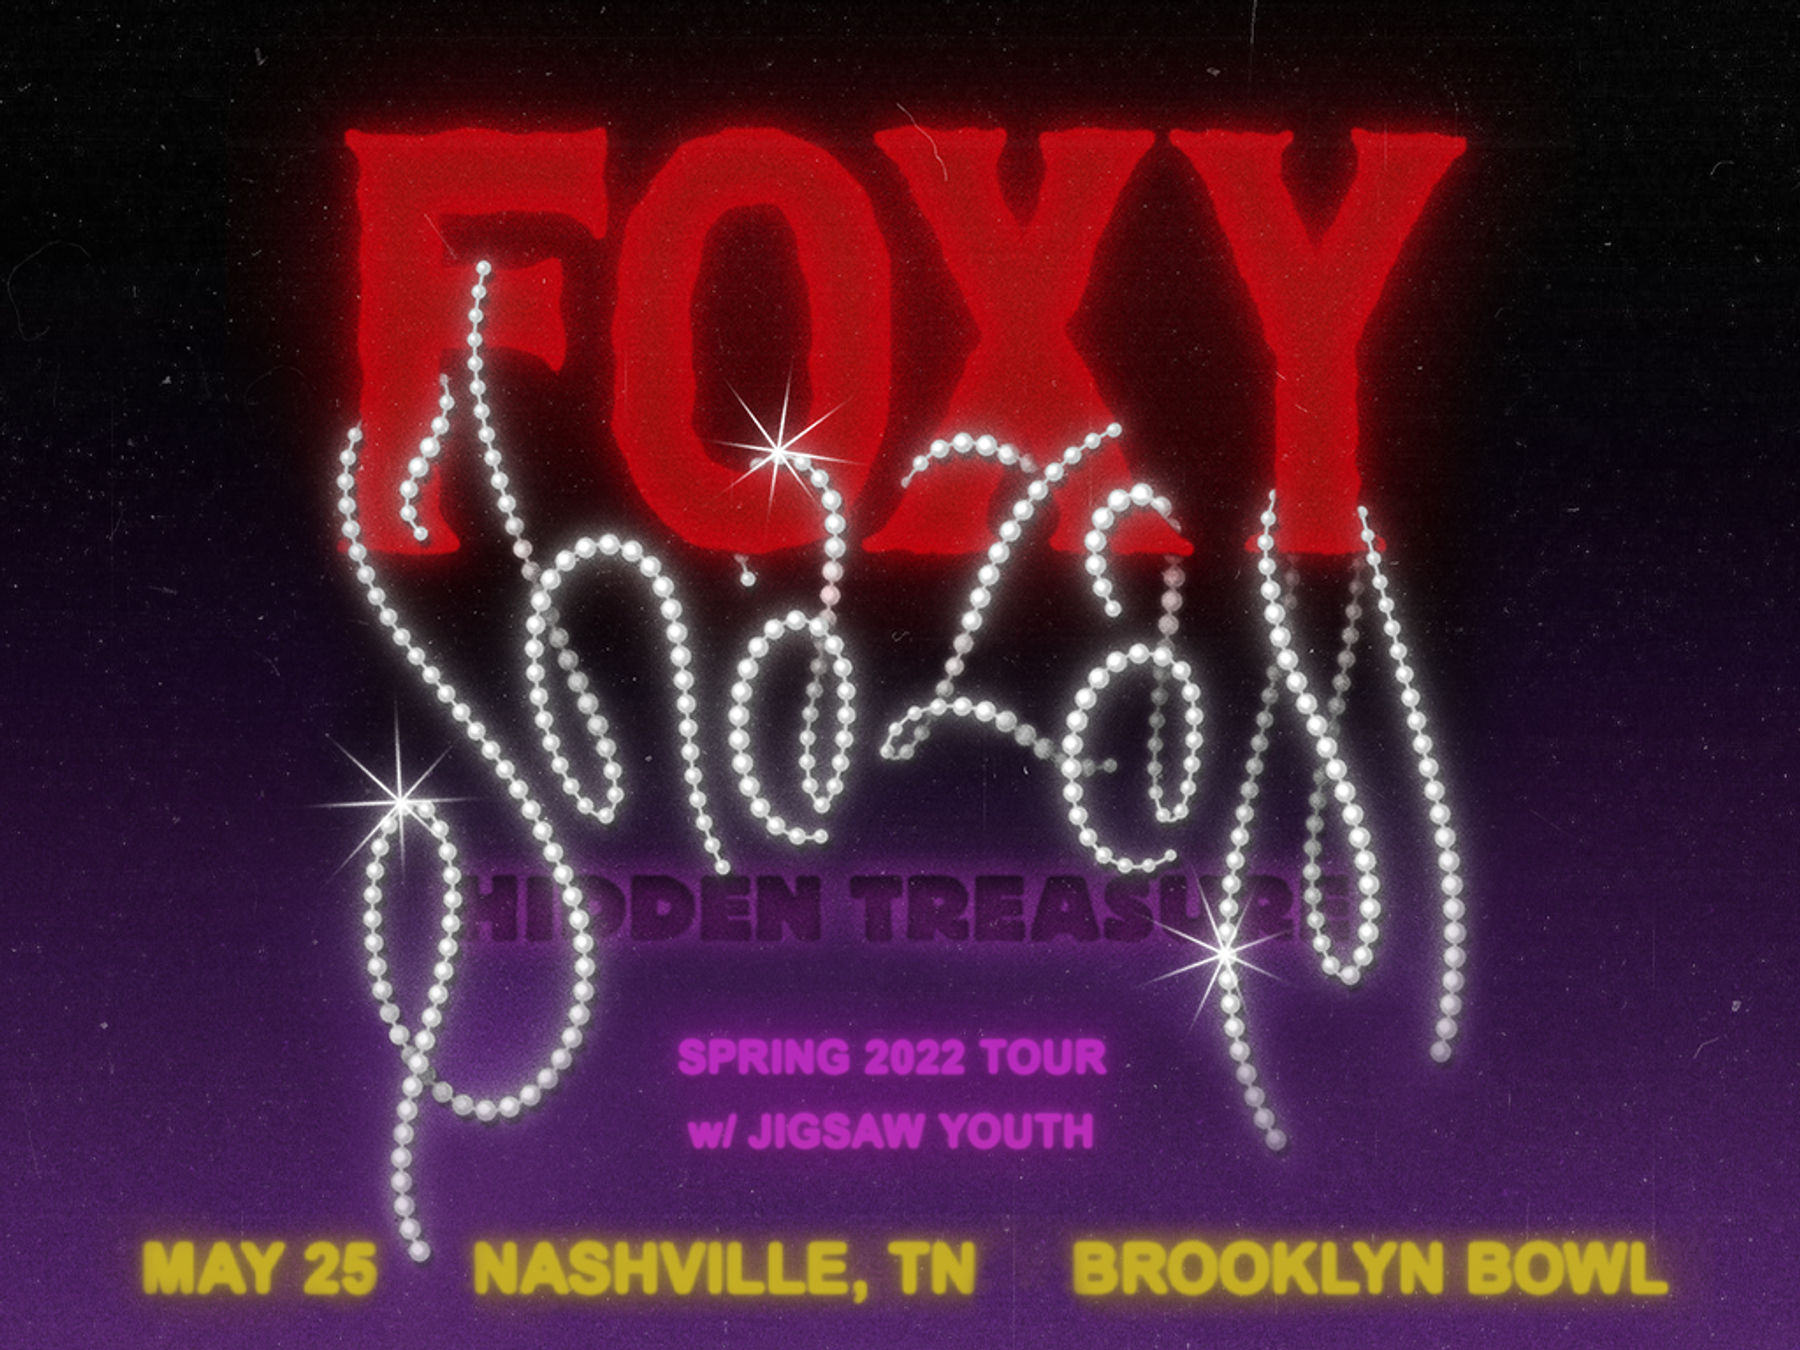 foxy shazam tour schedule